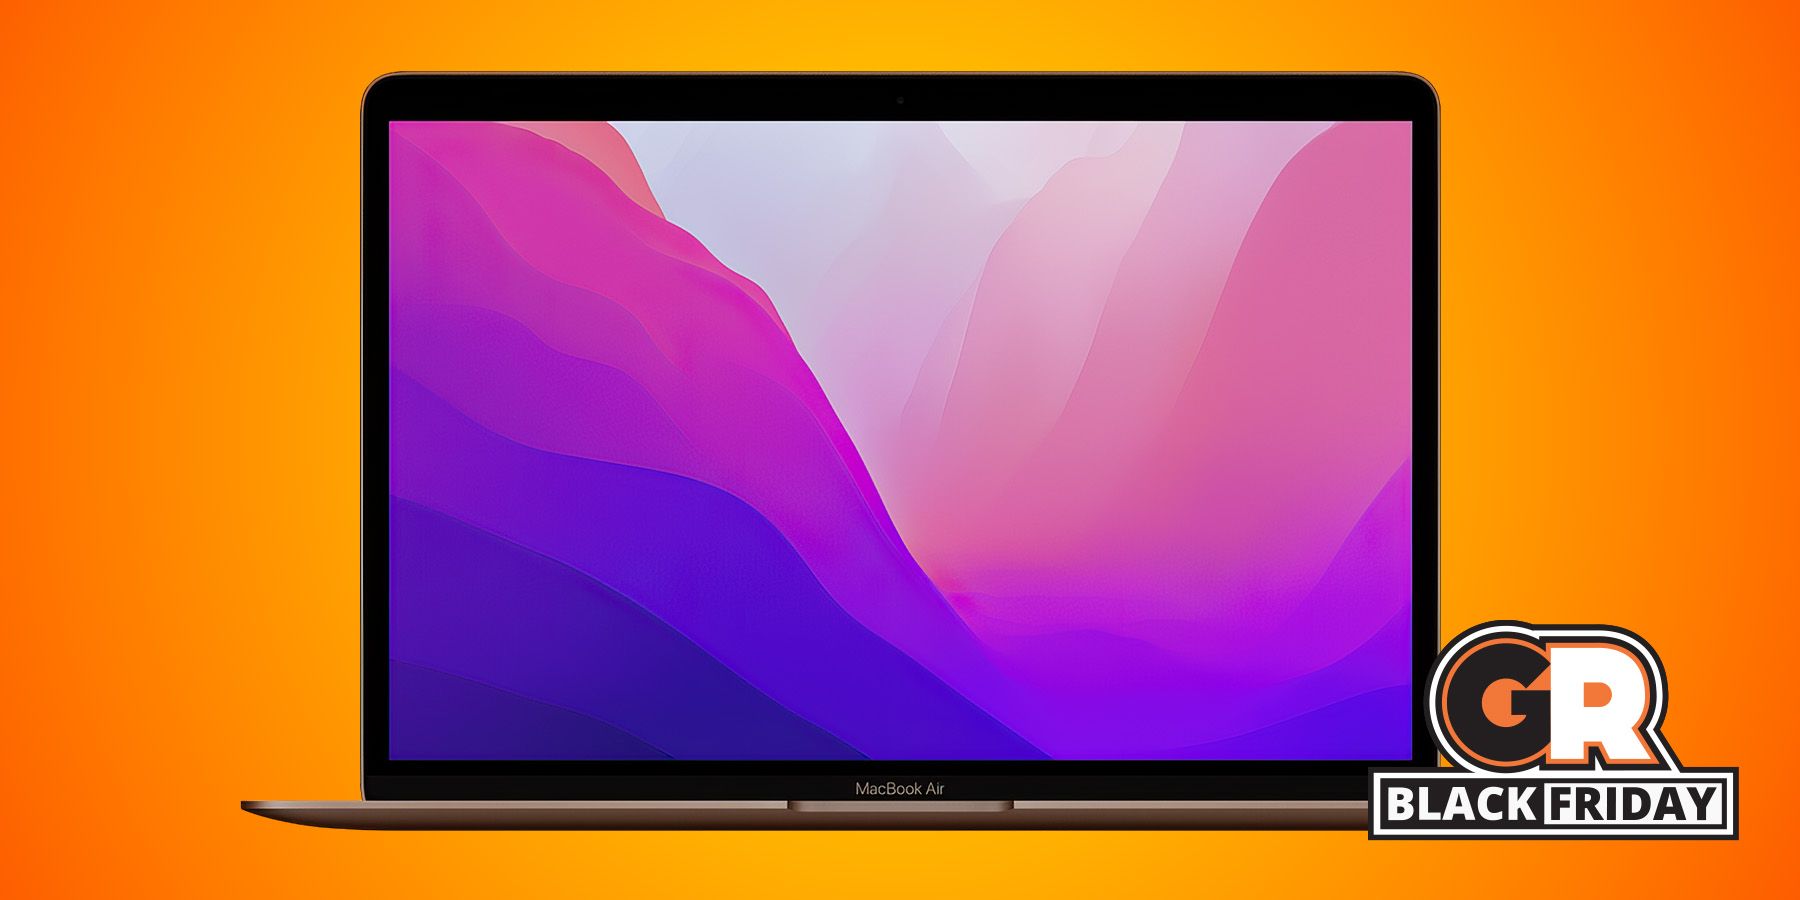 2020 macbook air m1 laptop gamerant amazon black friday deals feature